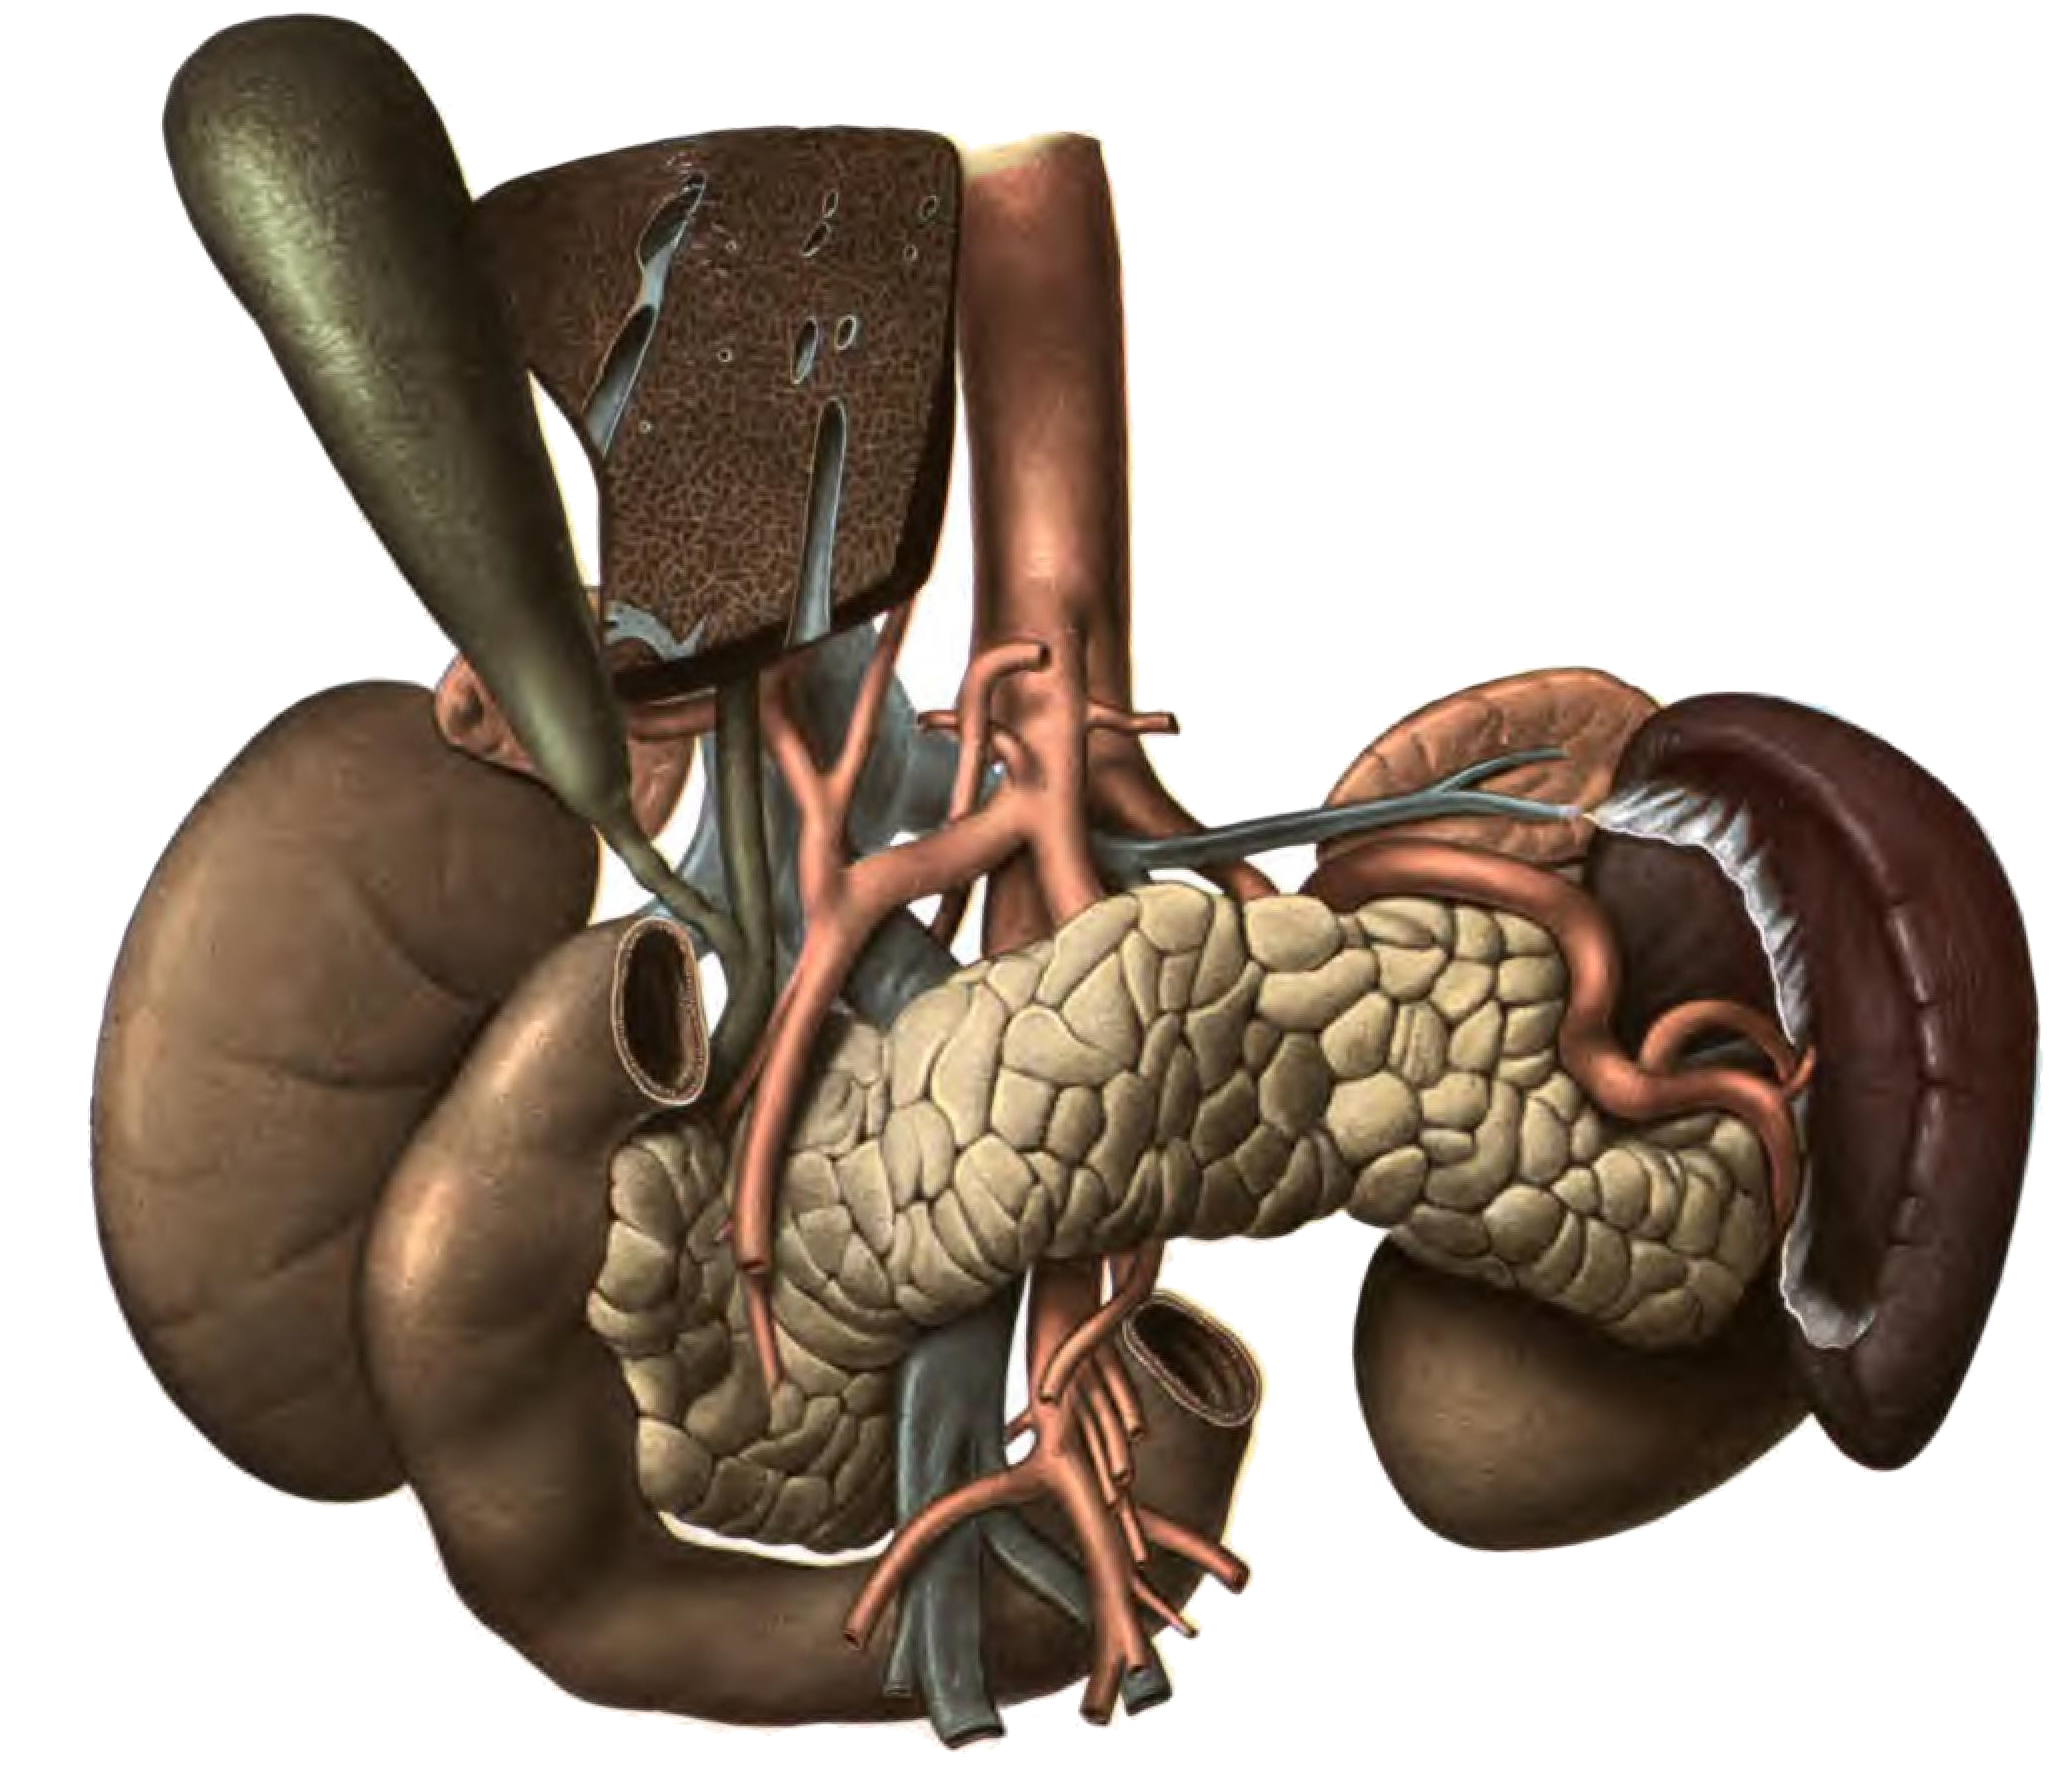 Image of pancreas anatomy,Dr. Johannes Sobotta, Public domain, via Wikimedia Commons,https://commons.wikimedia.org/wiki/File:Sobo_1906_393.png,https://upload.wikimedia.org/wikipedia/commons/1/1b/Sobo_1906_393.png